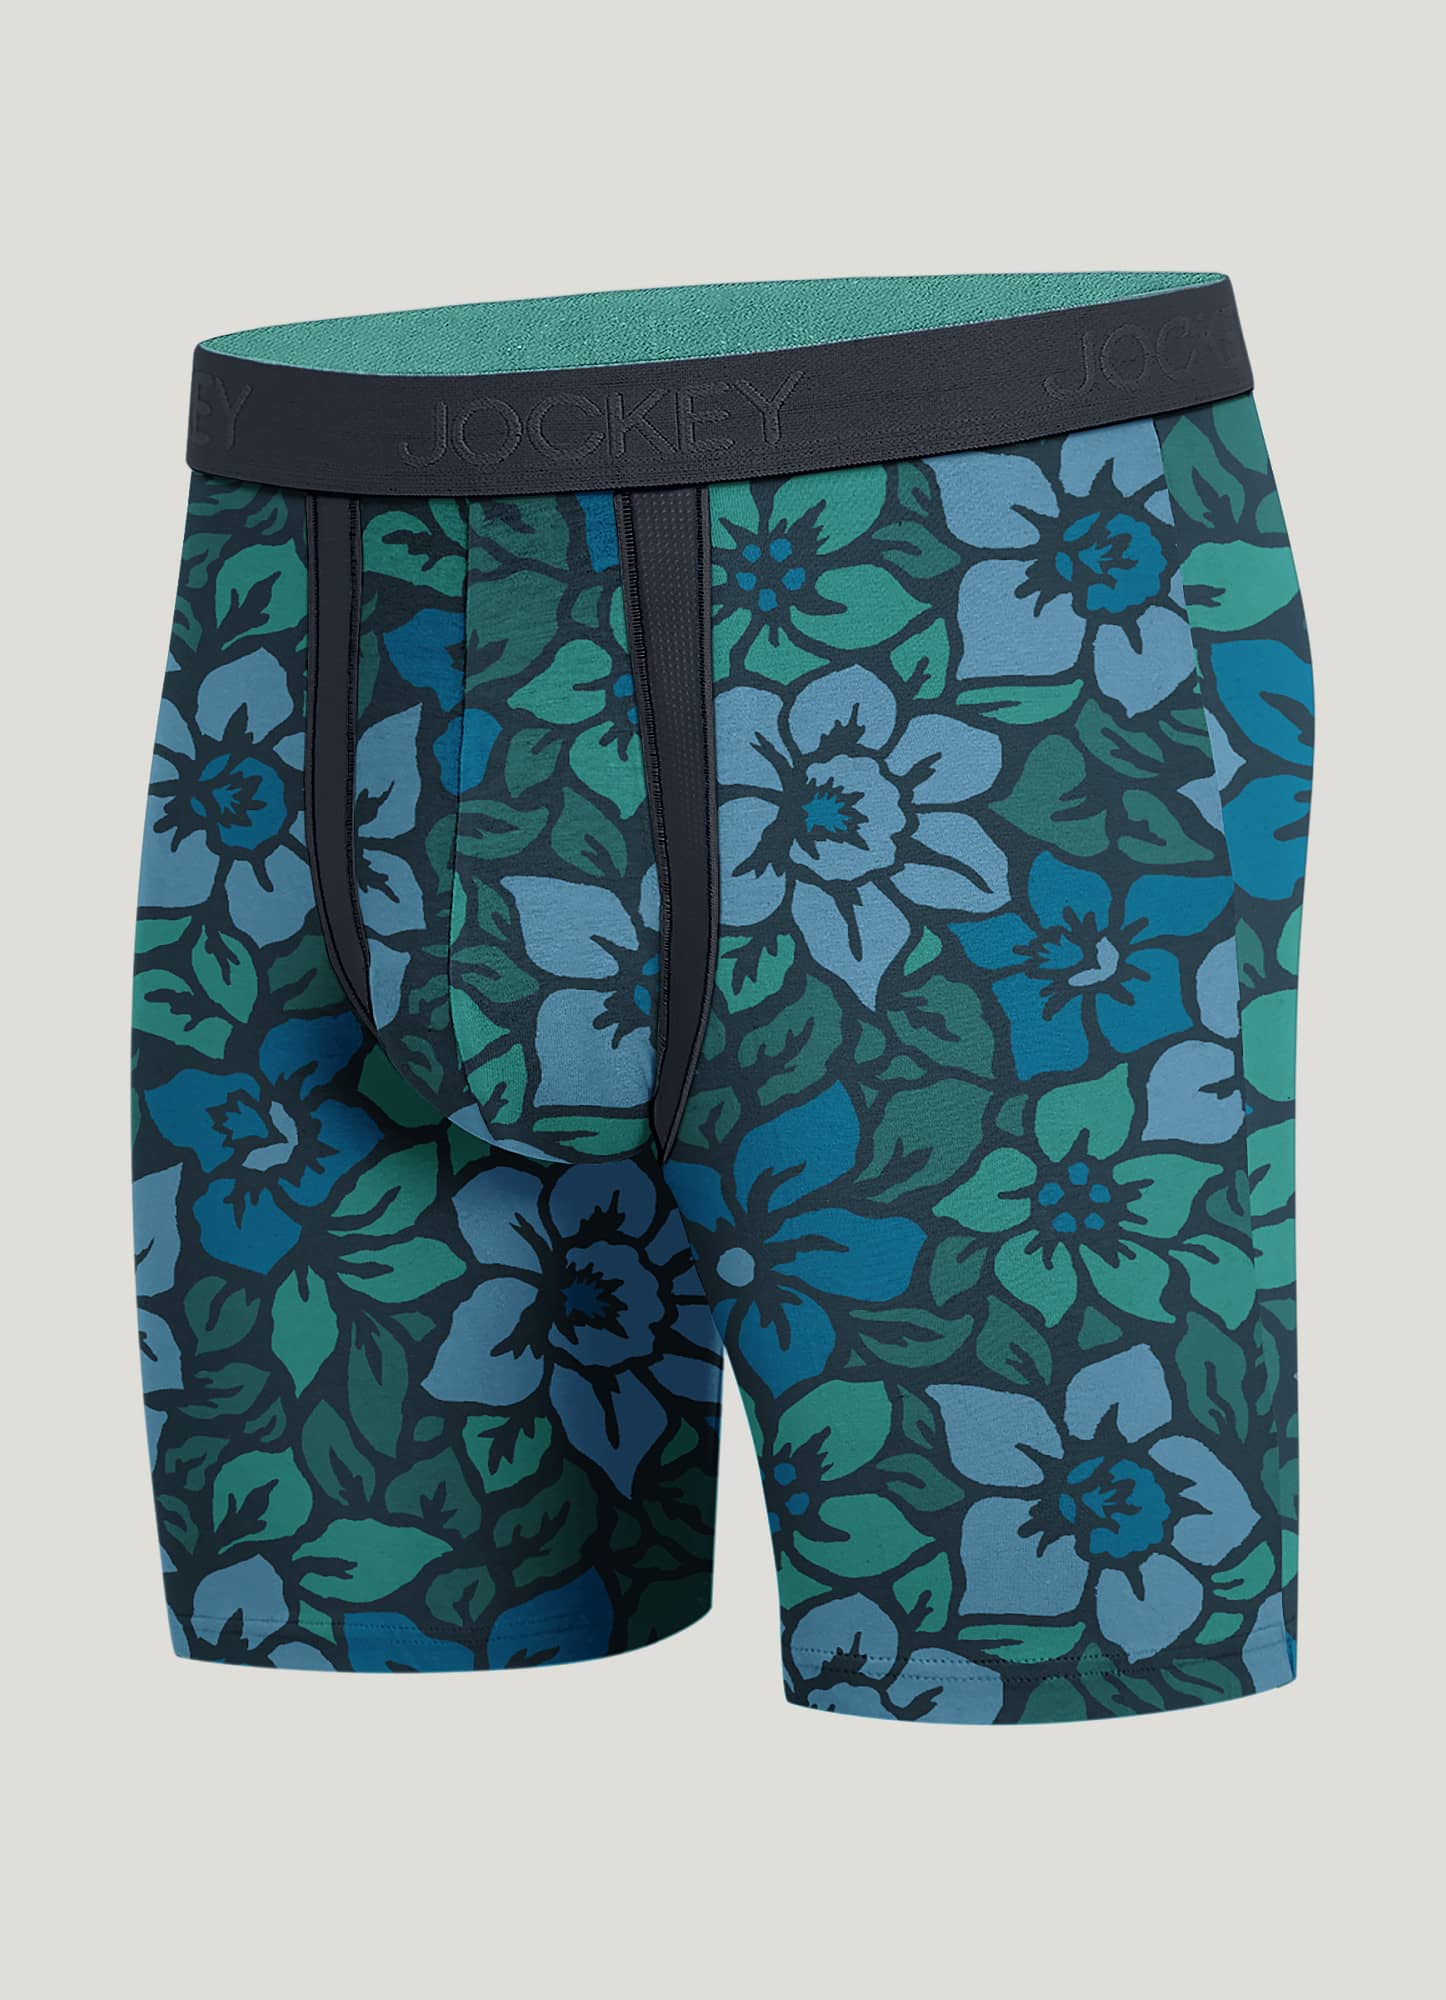 LEGBOX Women's Briefs Athletic Panties for Girls Women Underwear